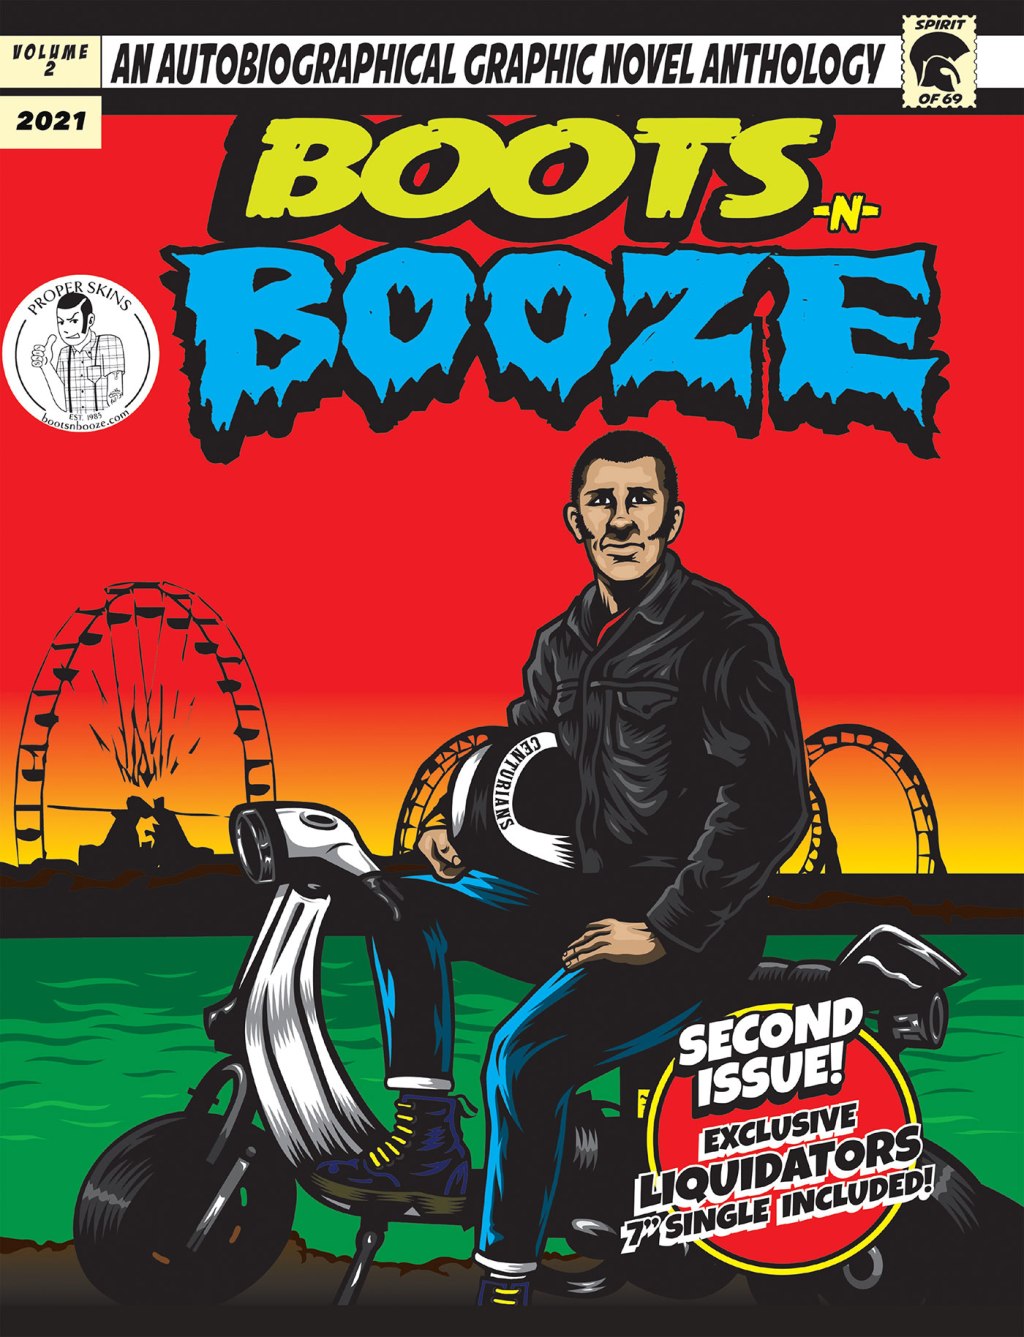 Boots'n'Booze Vol. 2.